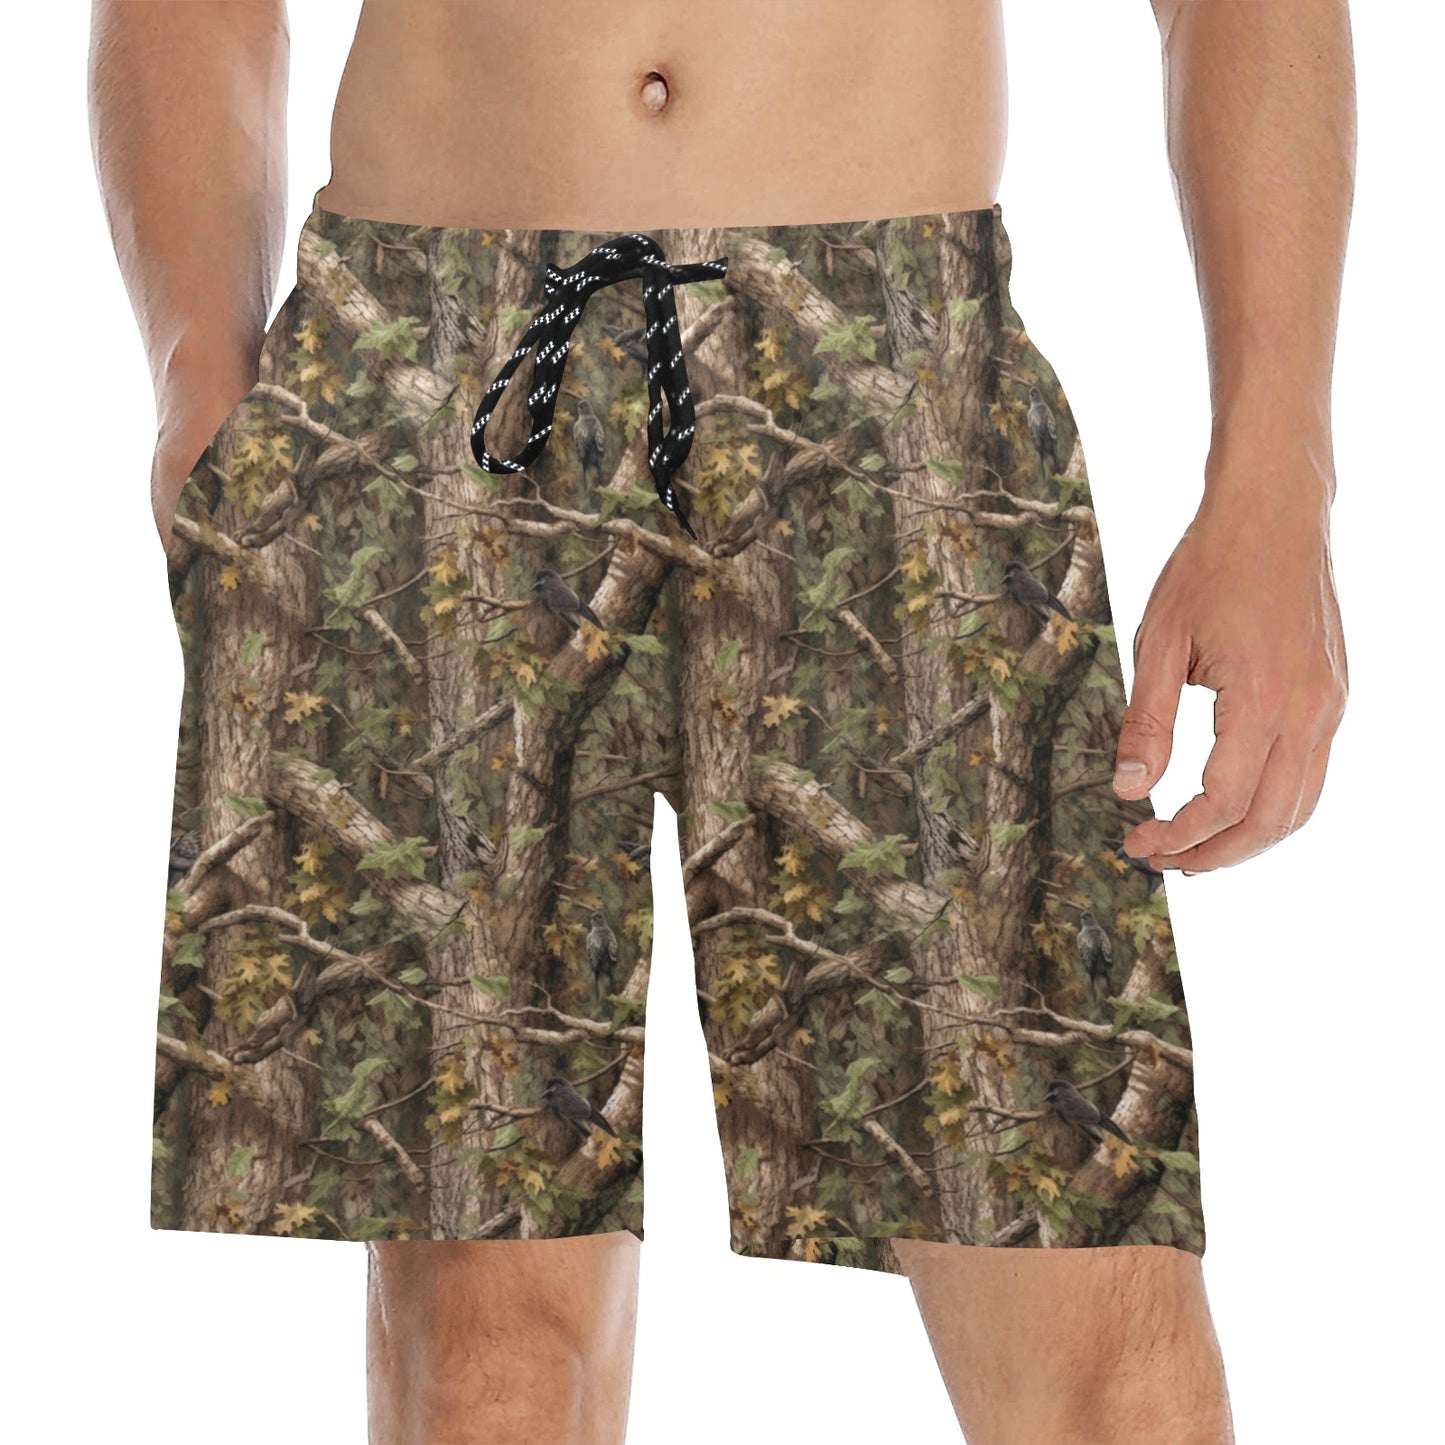 Tree Bark Camo Men Swim Trunks, Real Hunting Mid Length Shorts Green Camouflage Beach Pockets Mesh Lining Drawstring Bathing Suit Plus Size